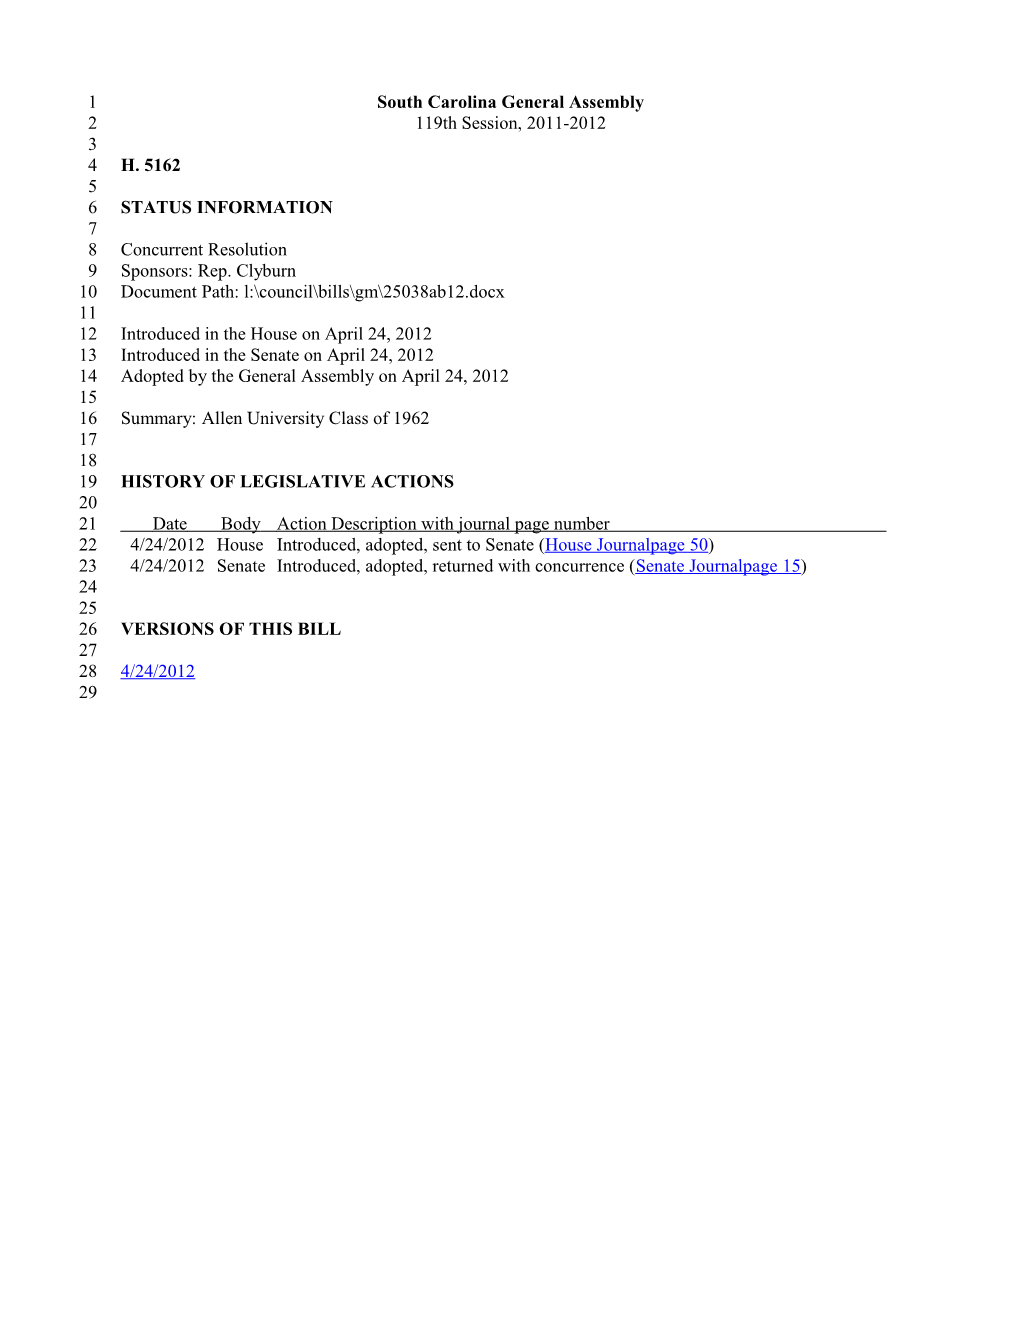 2011-2012 Bill 5162: Allen University Class of 1962 - South Carolina Legislature Online